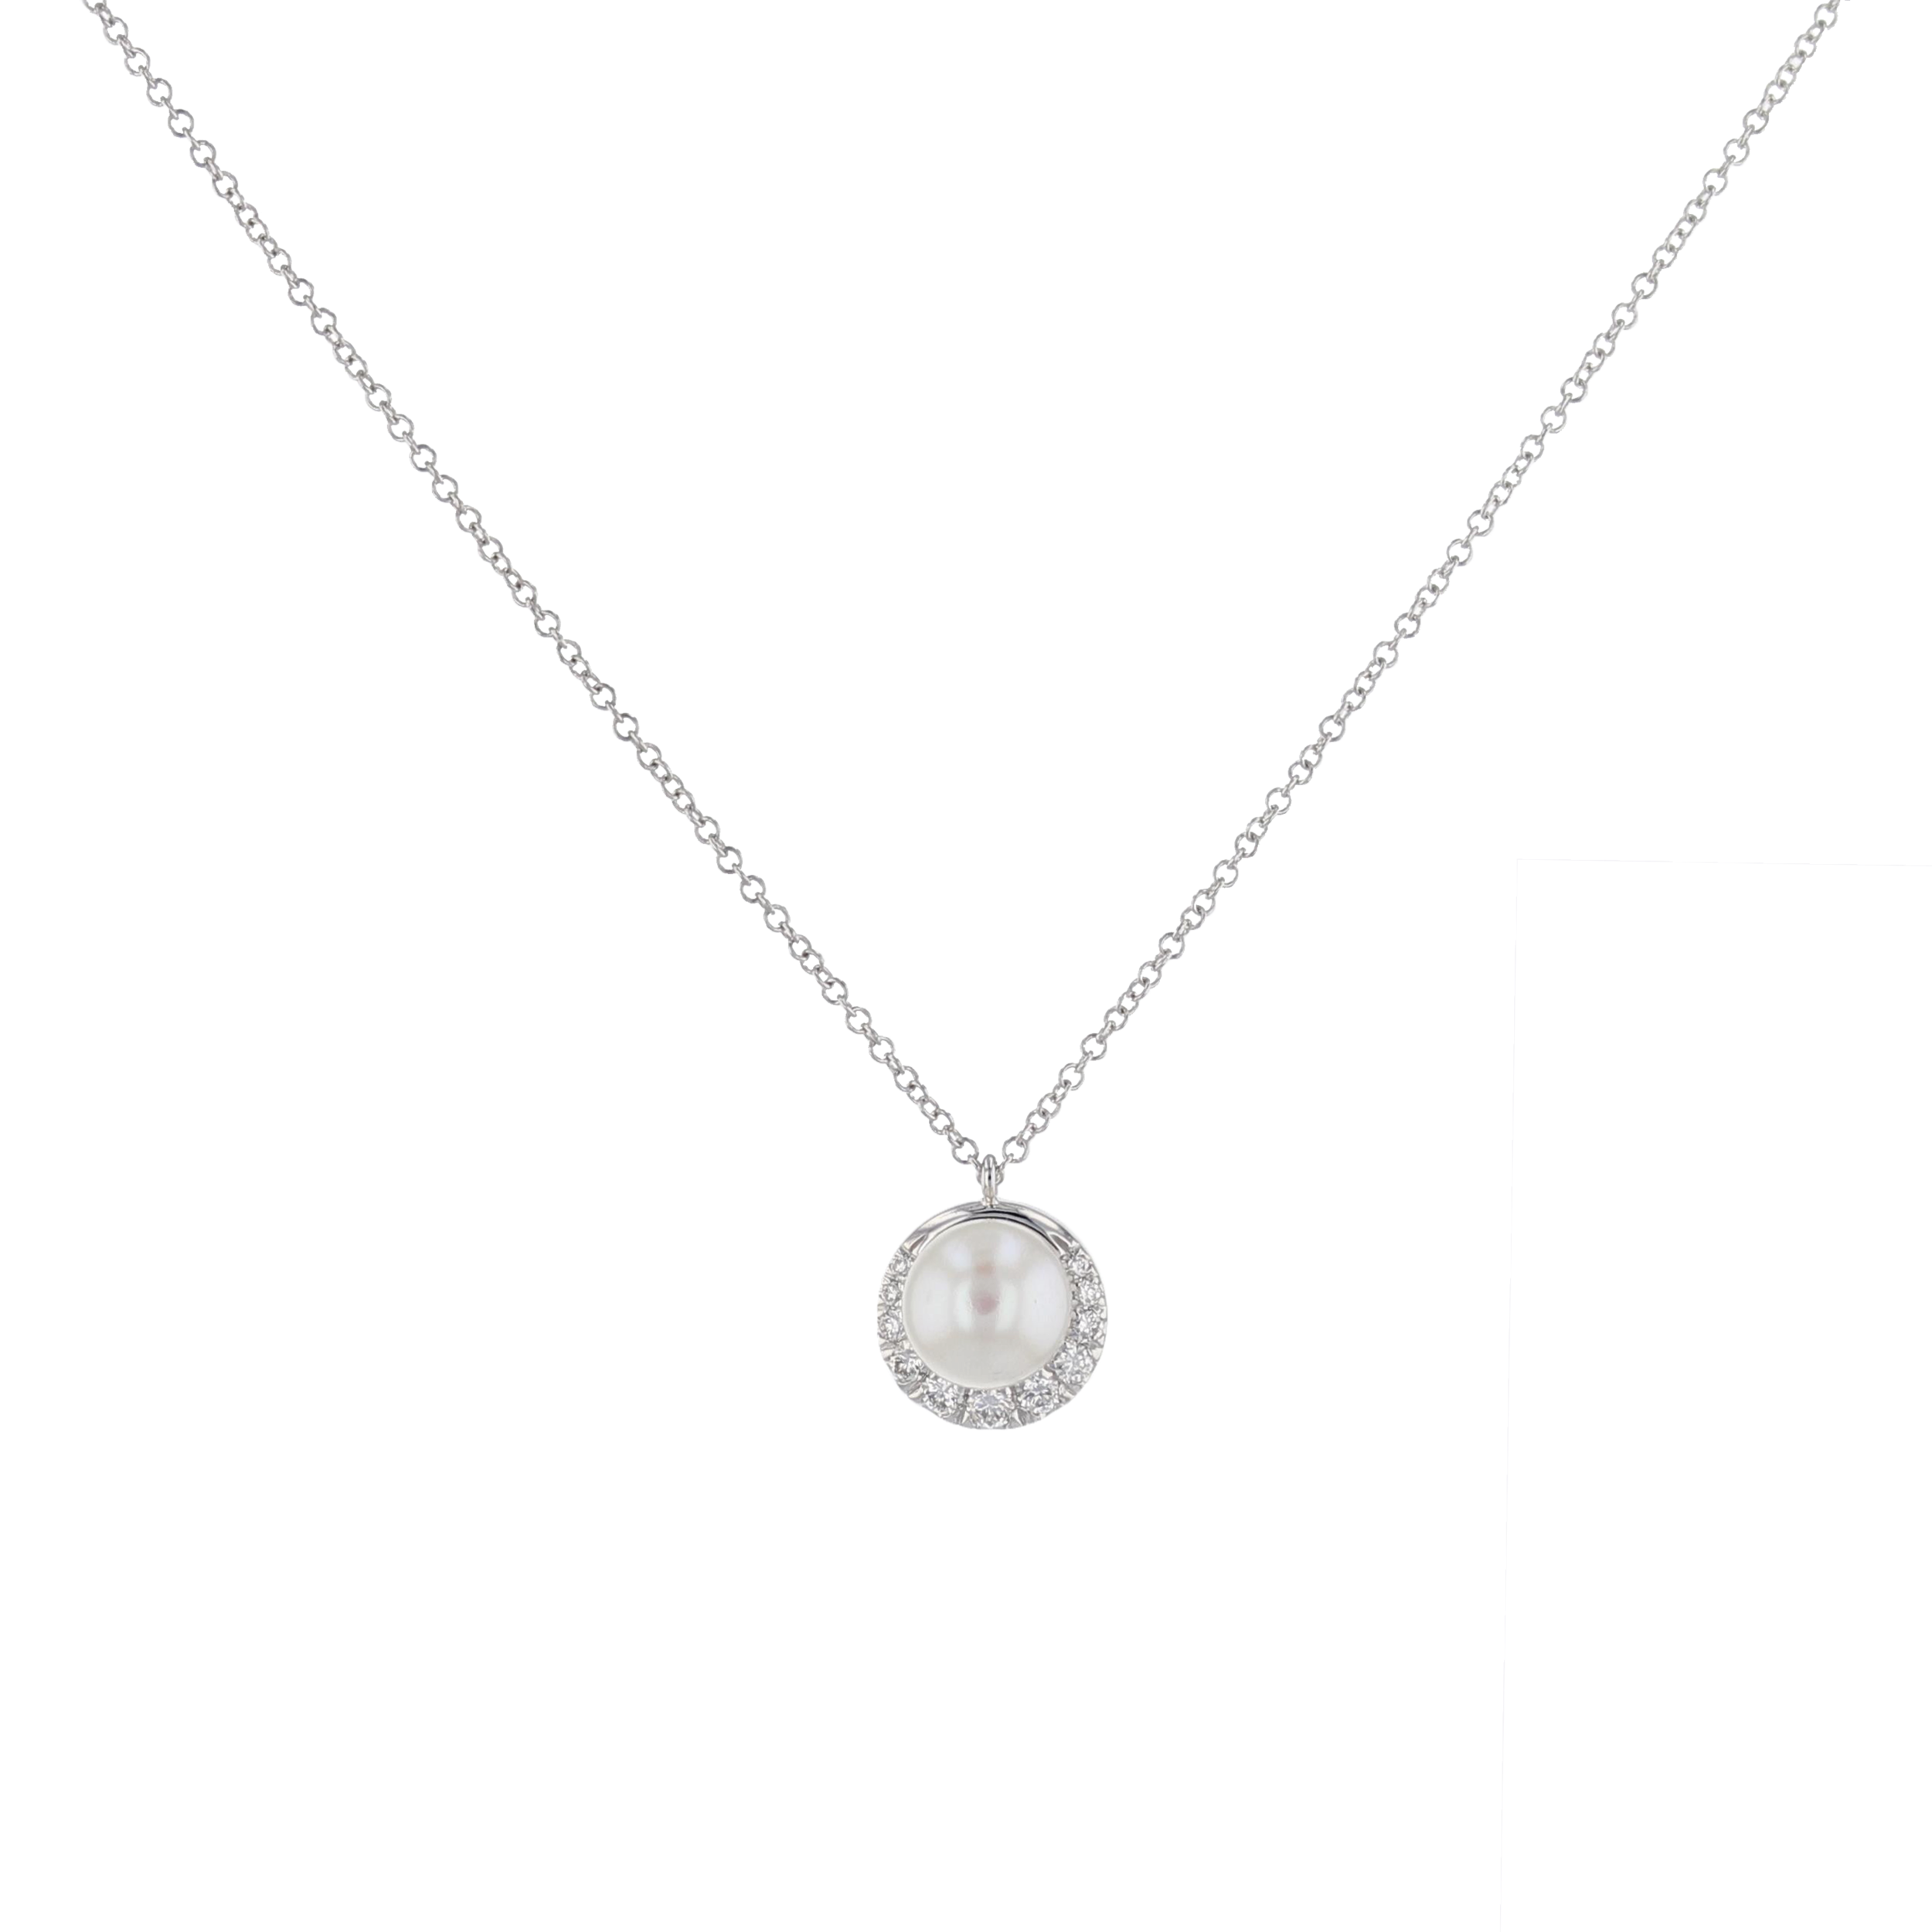 14k w/g Diamond and Pearl pendant. $1295